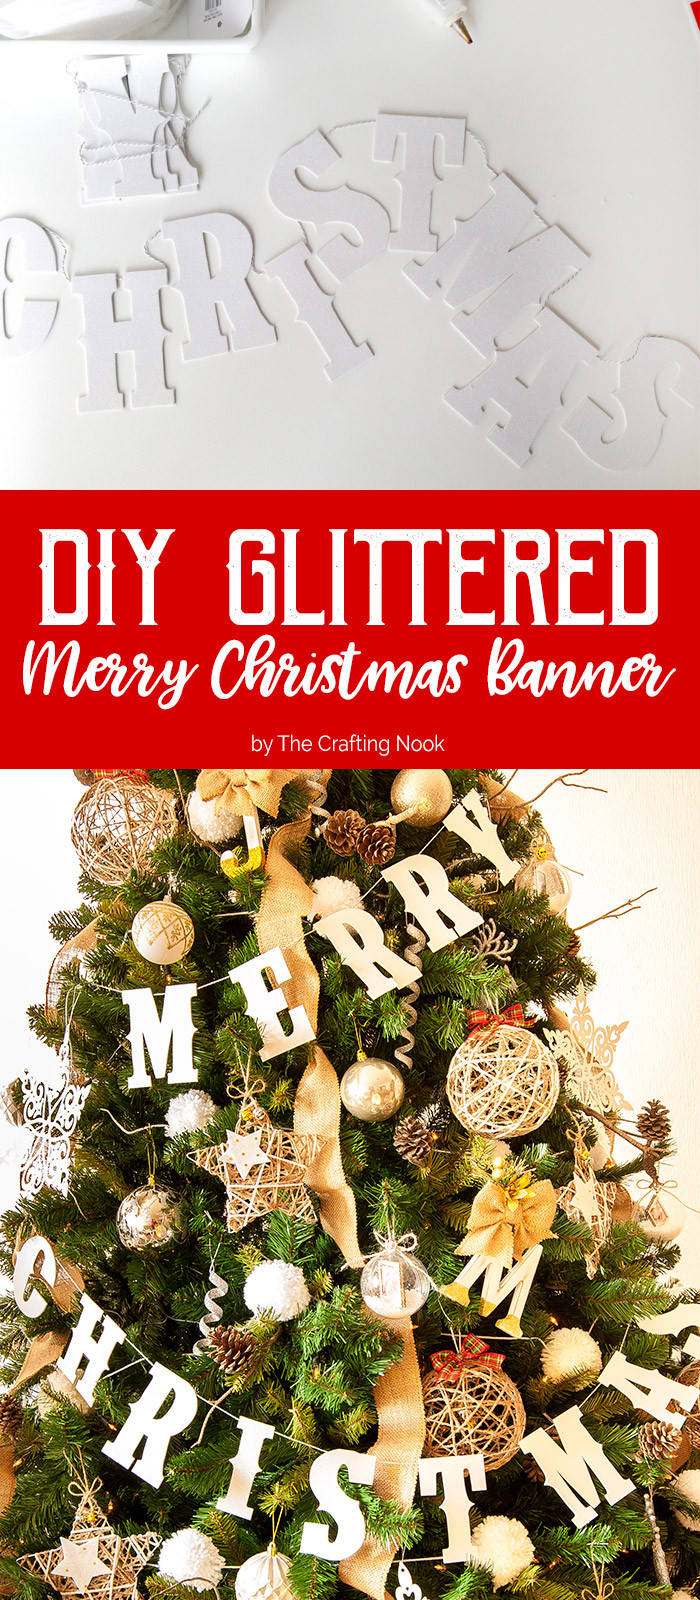 DIY Christmas Banner
 DIY Glittered Merry Christmas Banner